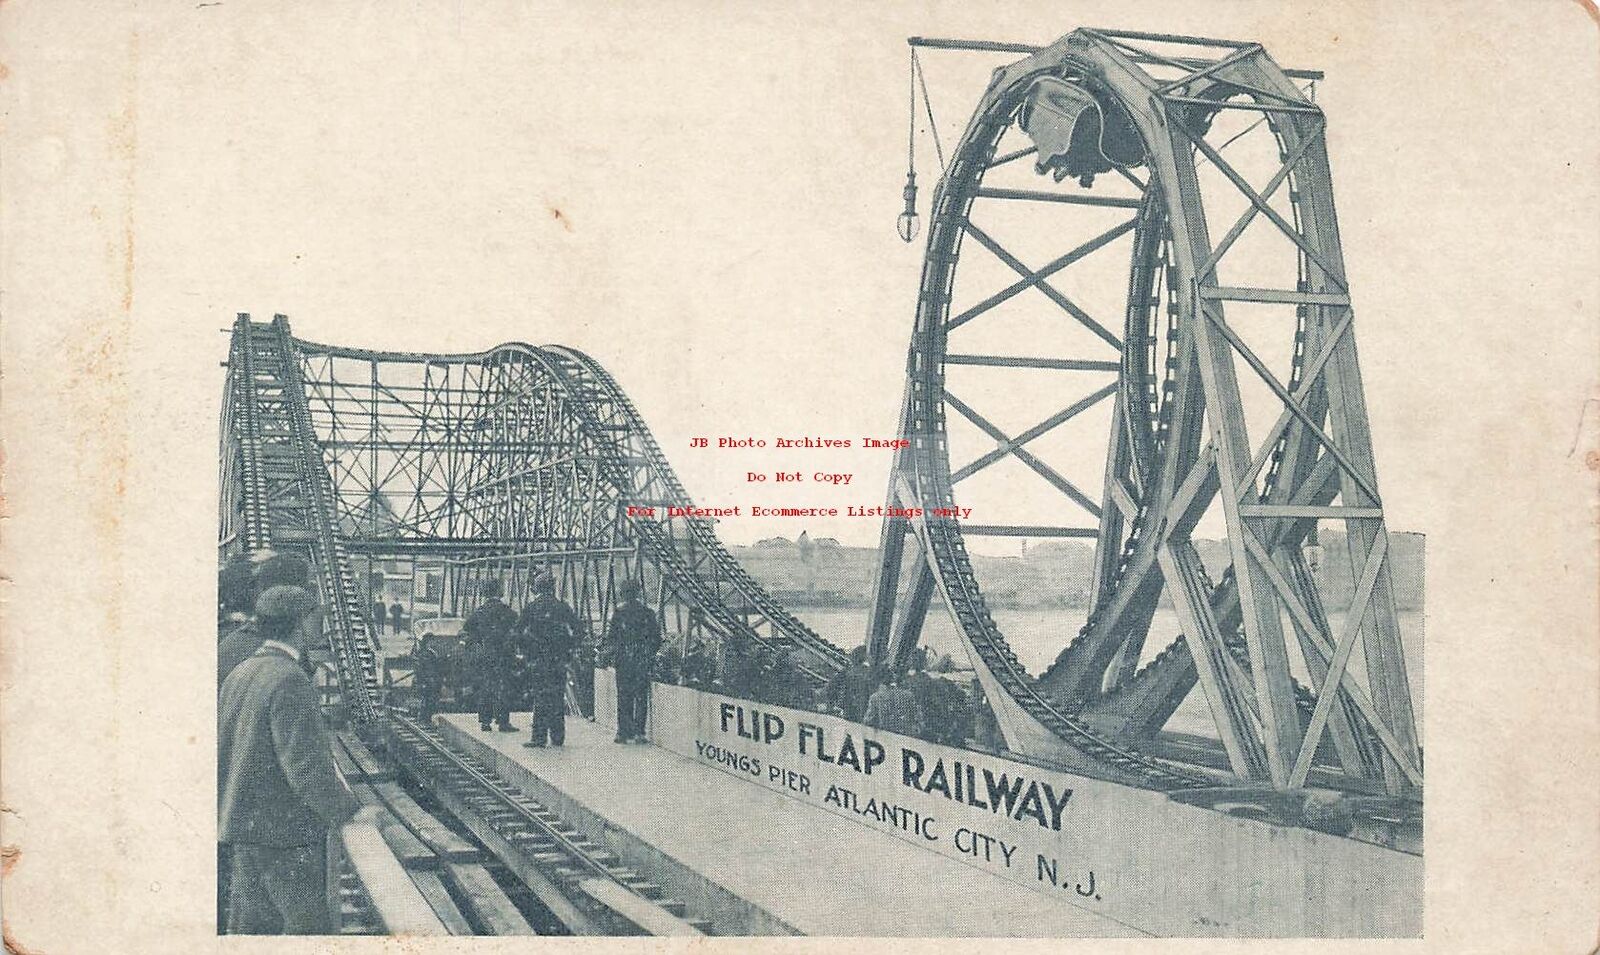 NJ, Atlantic City, New Jersey, Youngs Pier Flip Flap Railway Roller Coaster